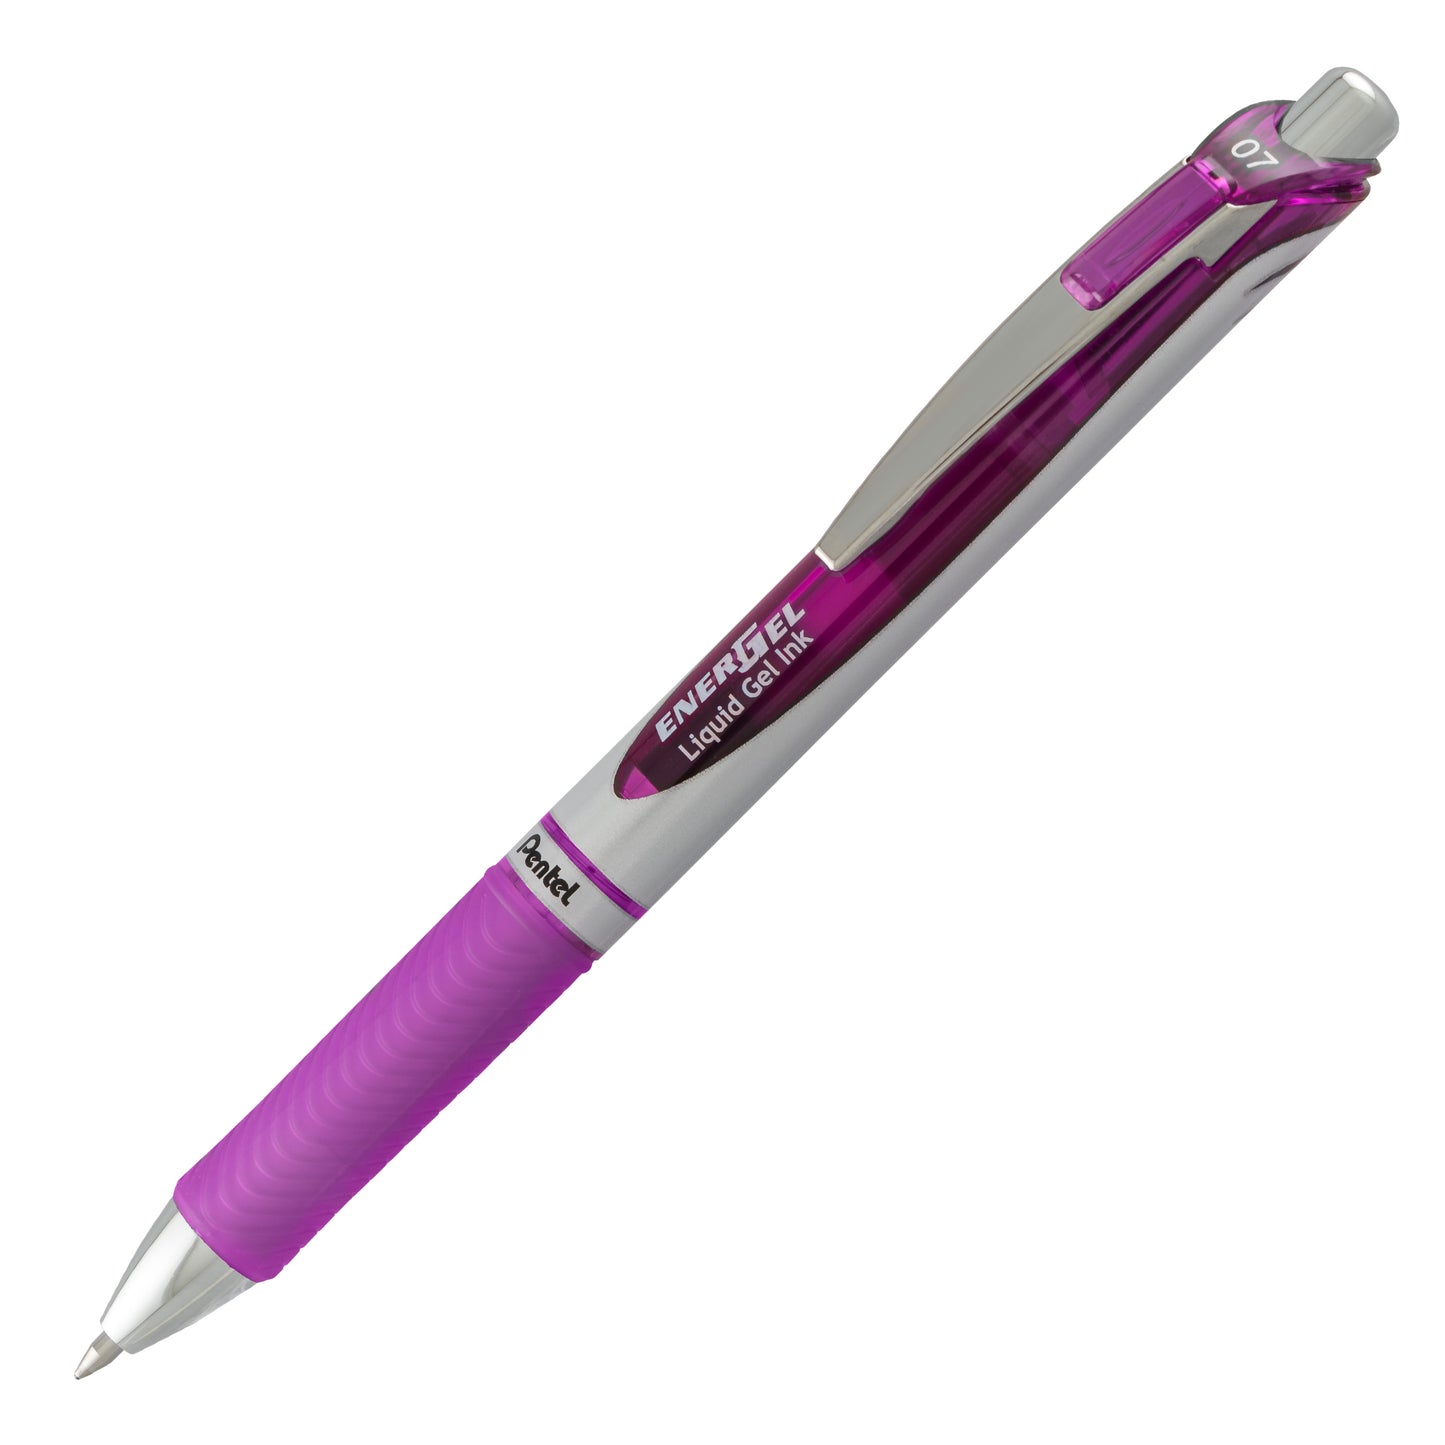 Second Mansion Solid Basic Pen Pouch, Lavender